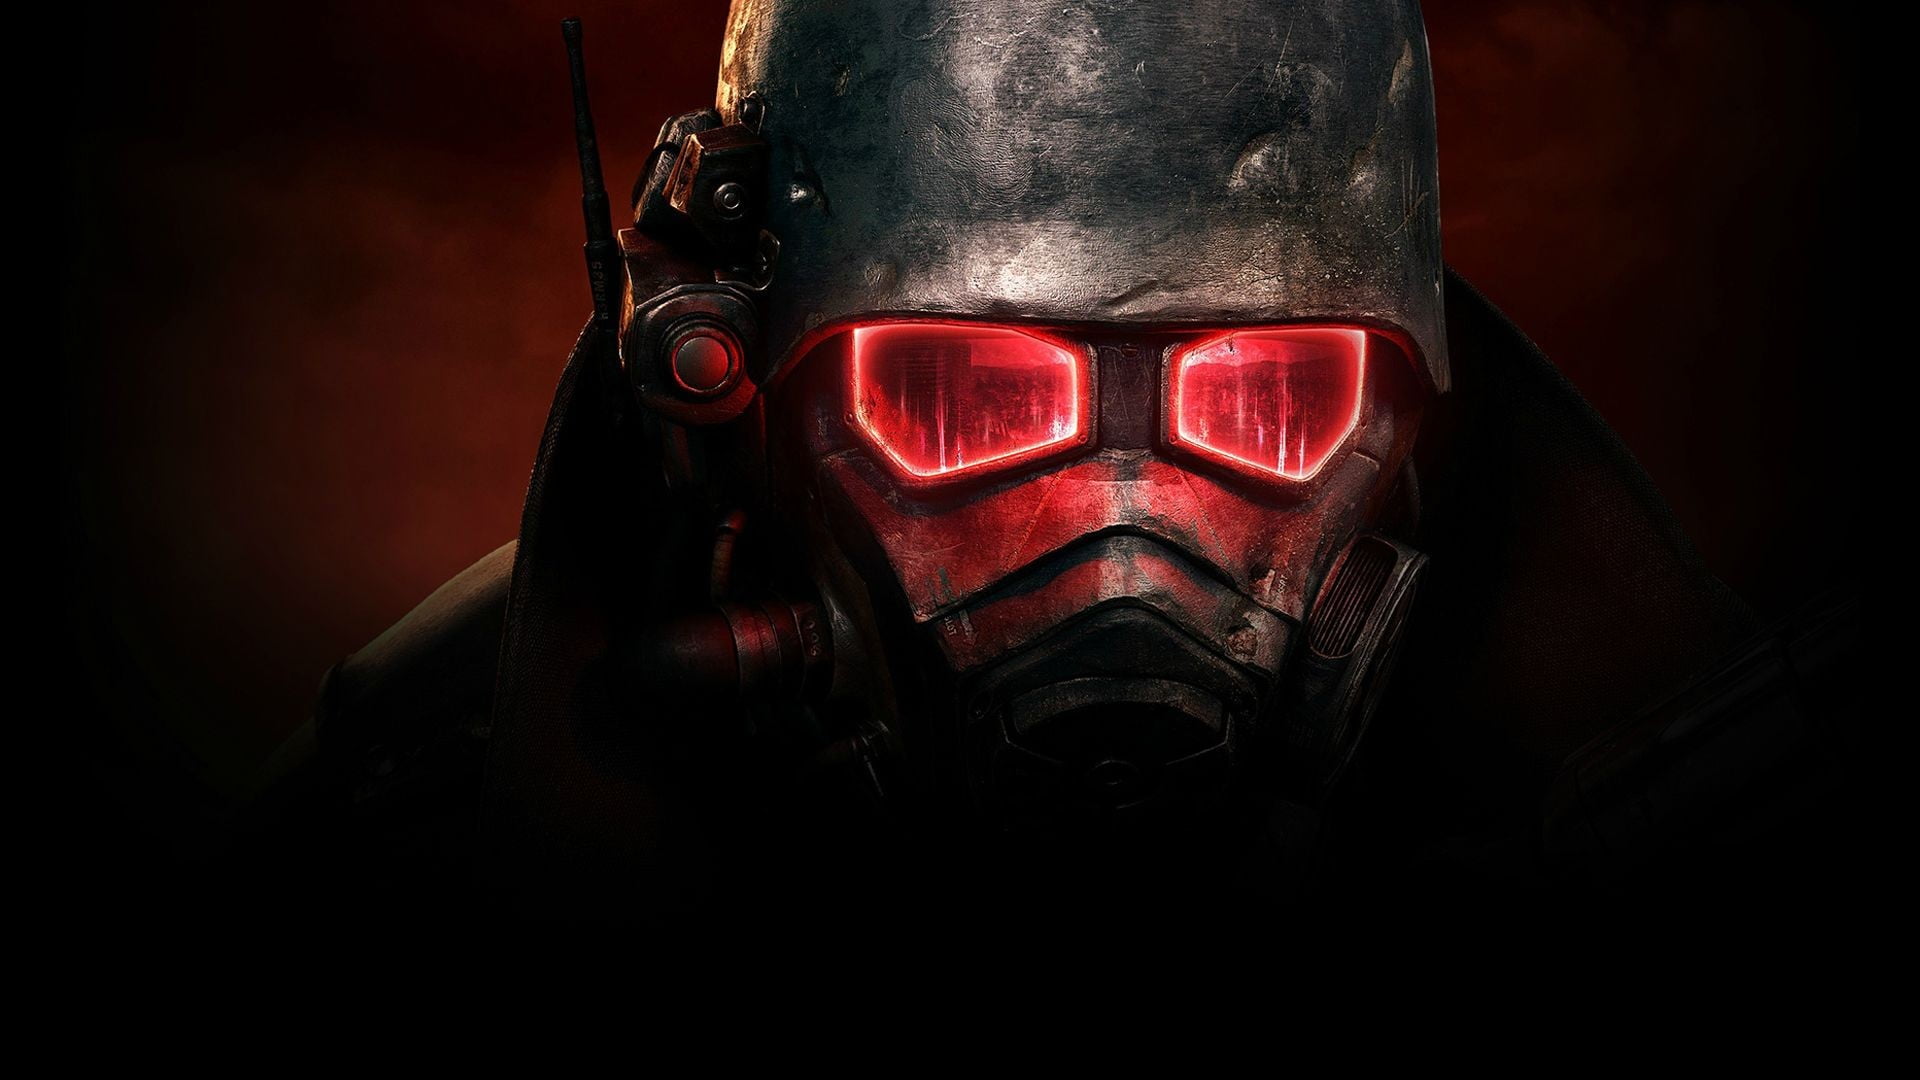 1920x1080 resolution | Fallout New Vegas riot armor helmet illustration ...